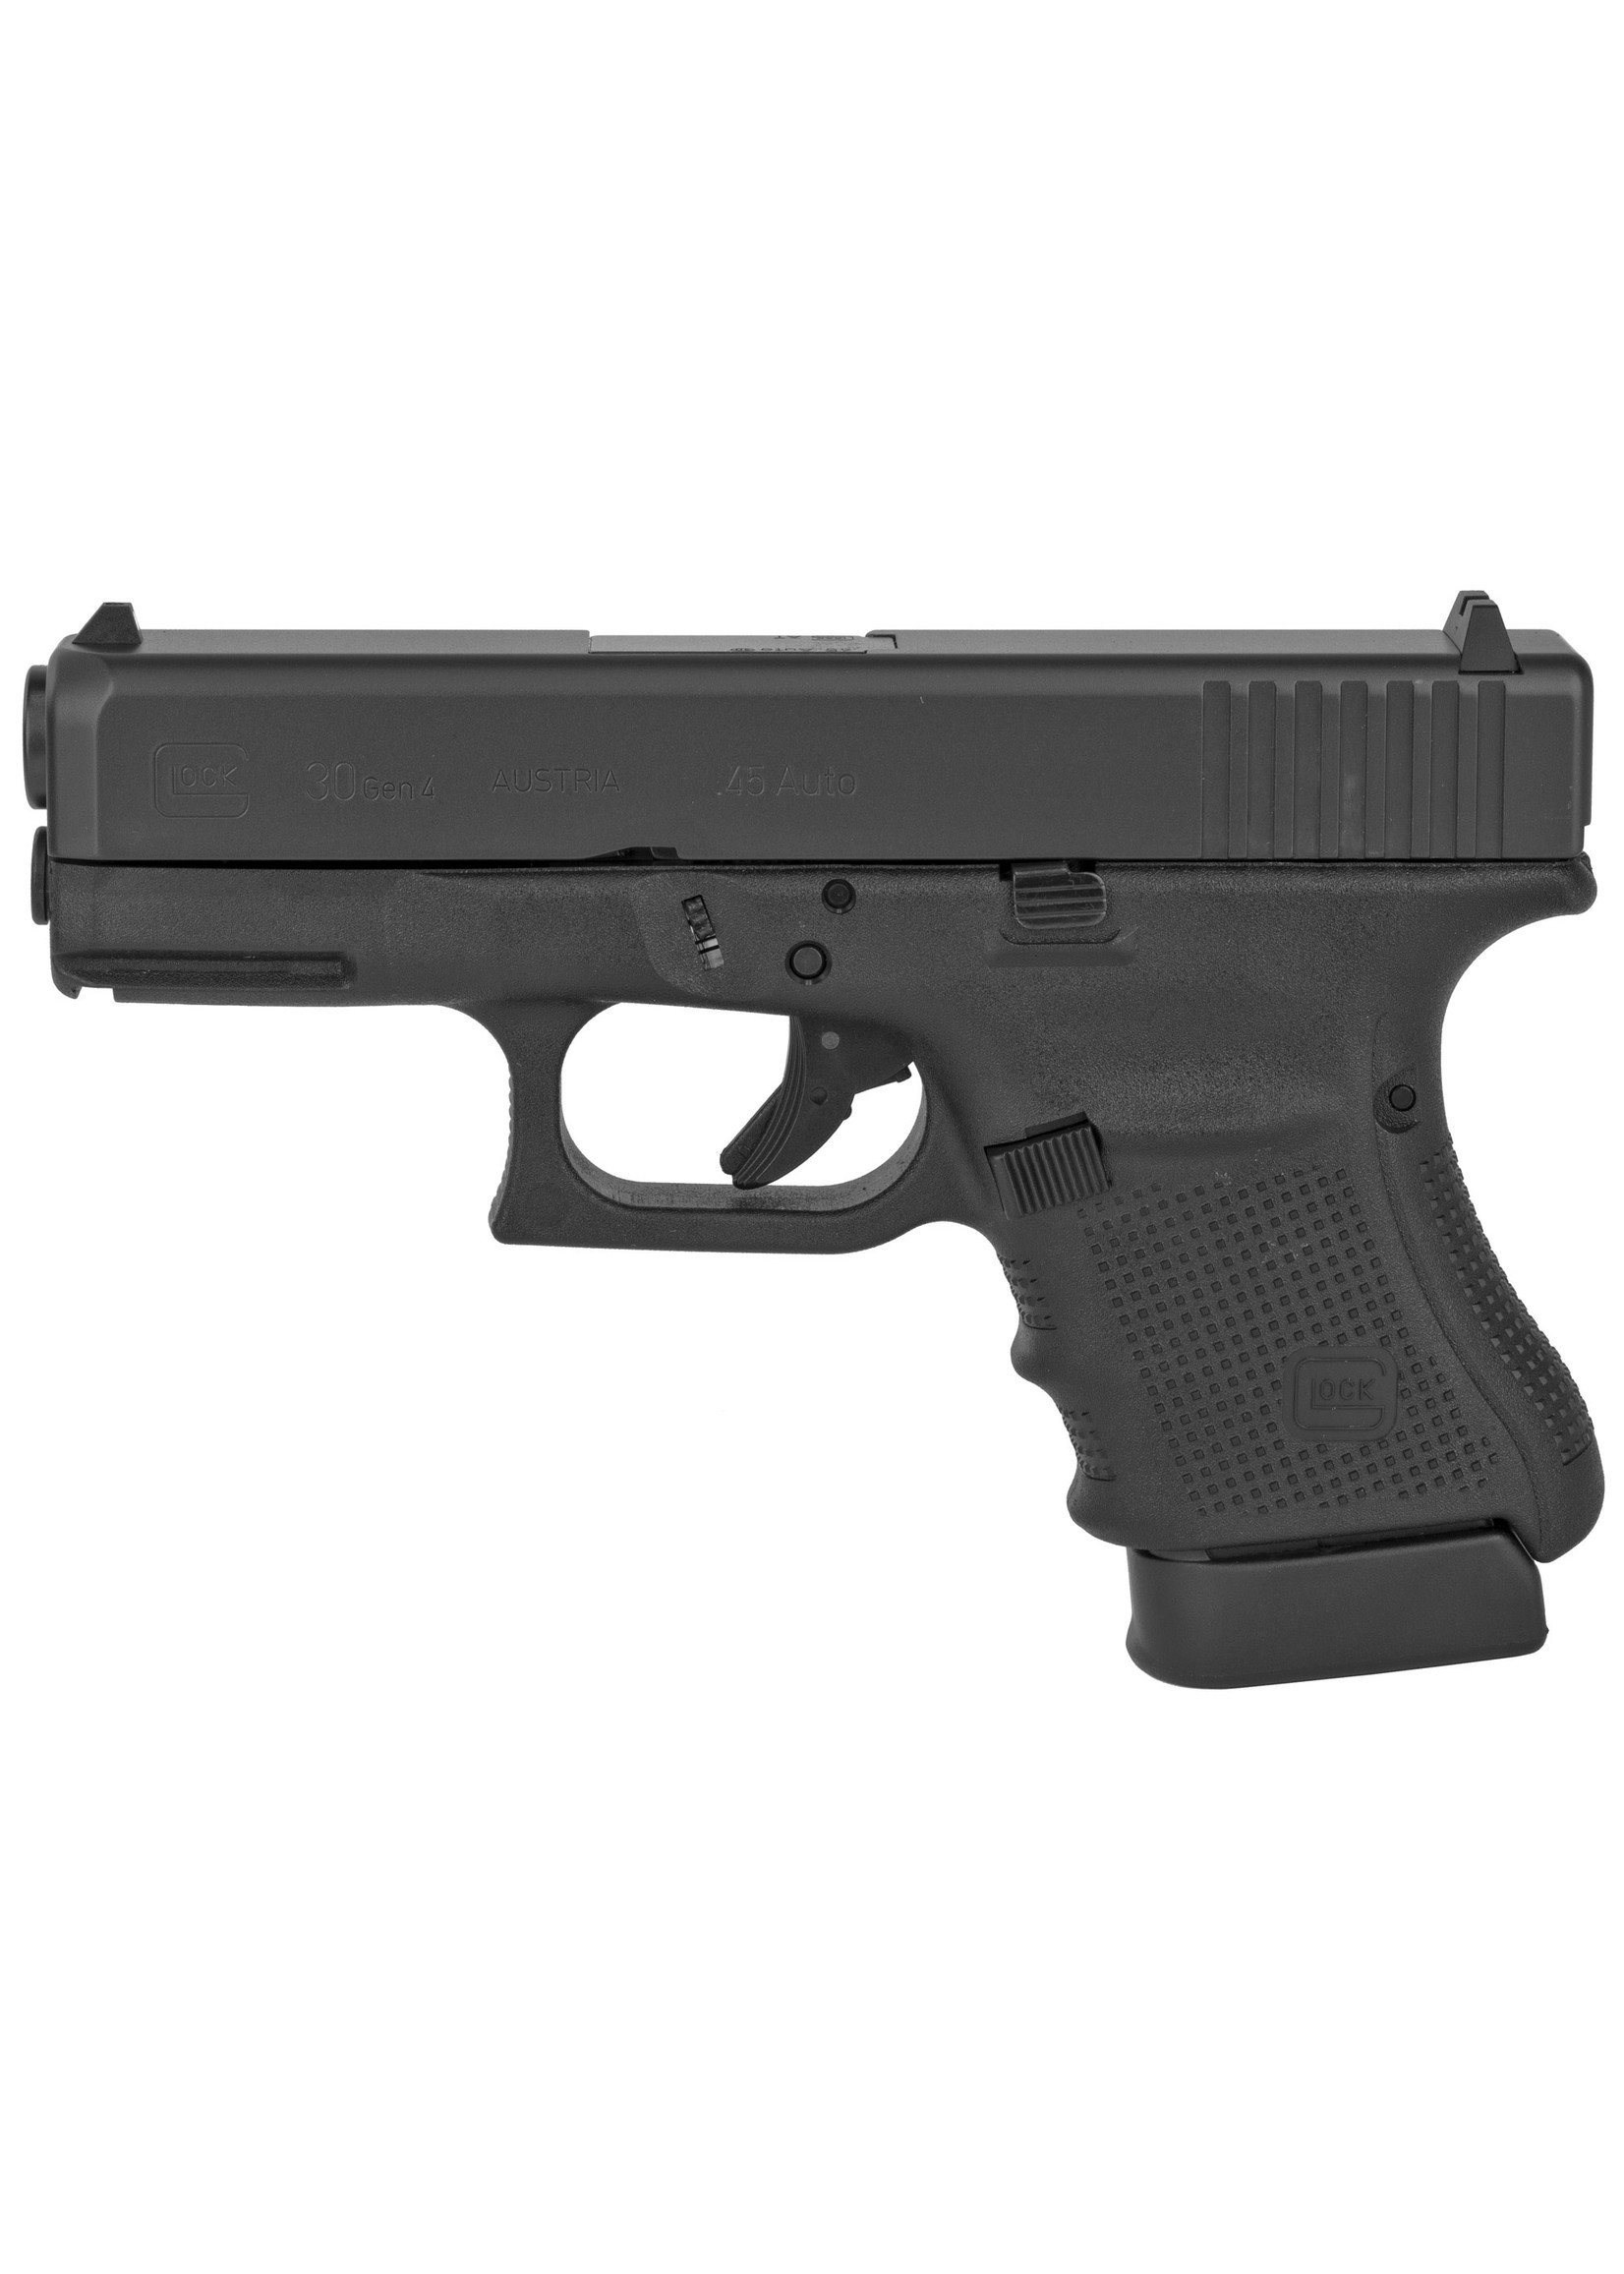 Glock Glock 30 G4 45ACP 10+1 3.78",  (3) 10-rd mags, accessory rail